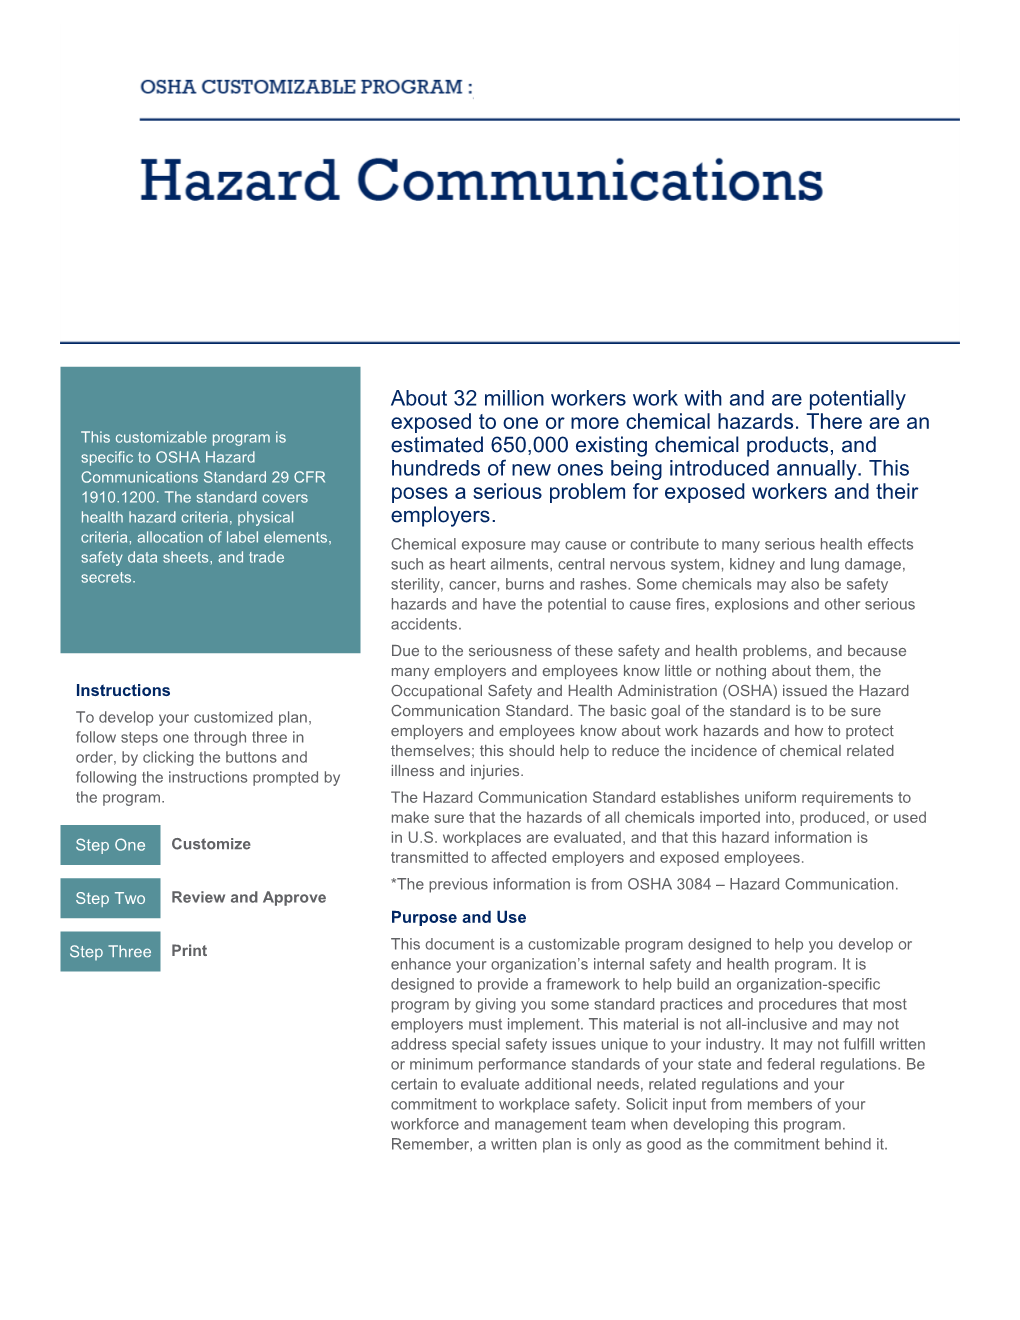 OSHA Customizable Program: Hazard Communications, LC 4503